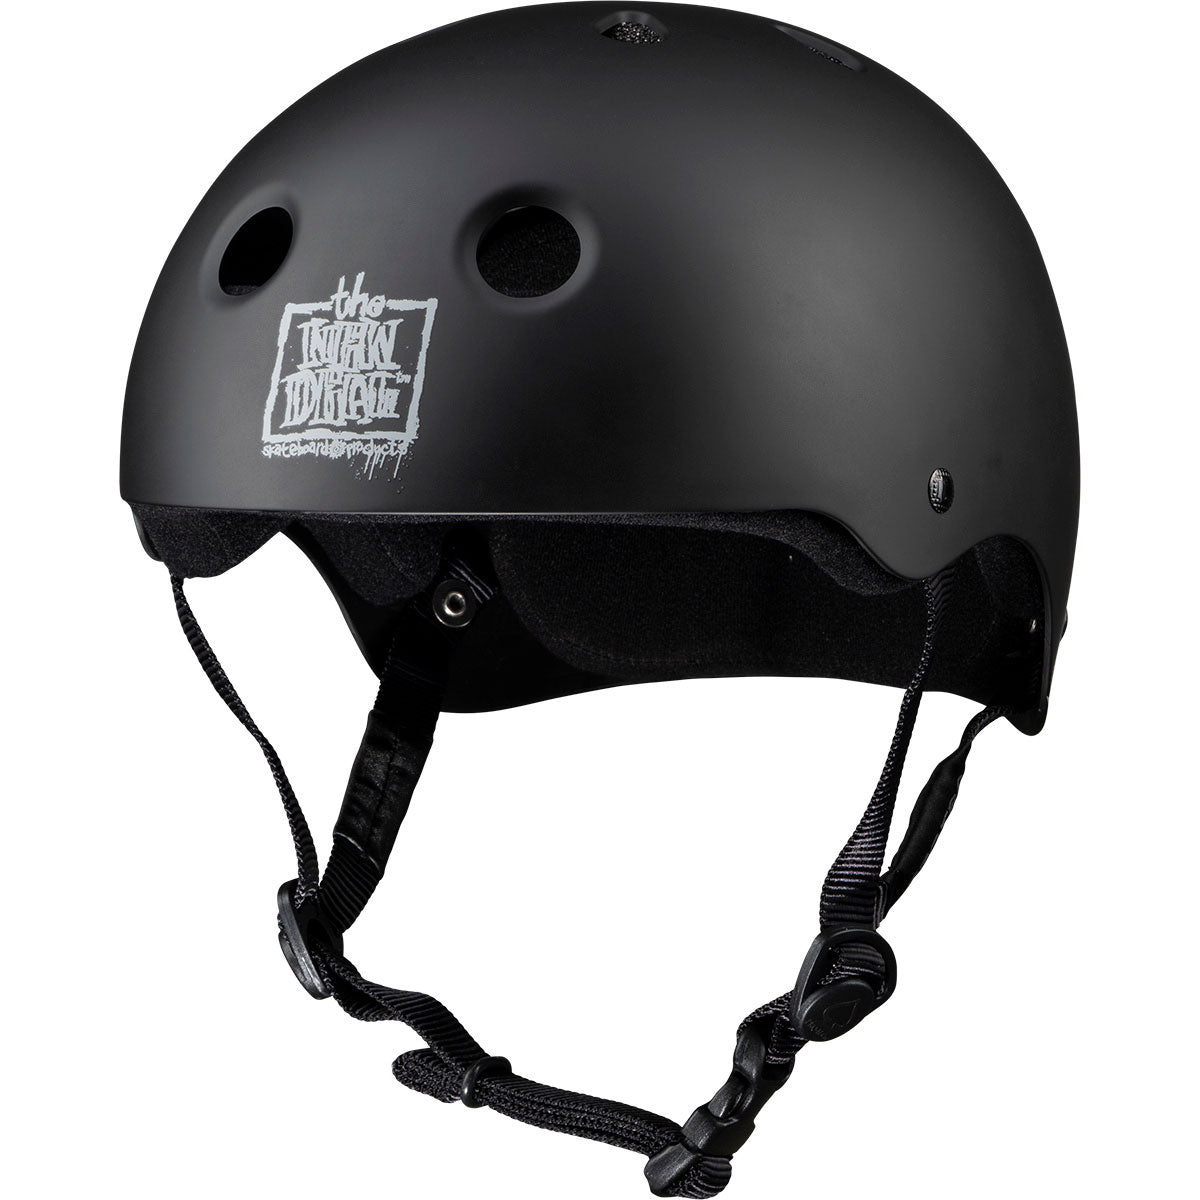 Pro Tec x New Deal Spray Helmet - Black image 1